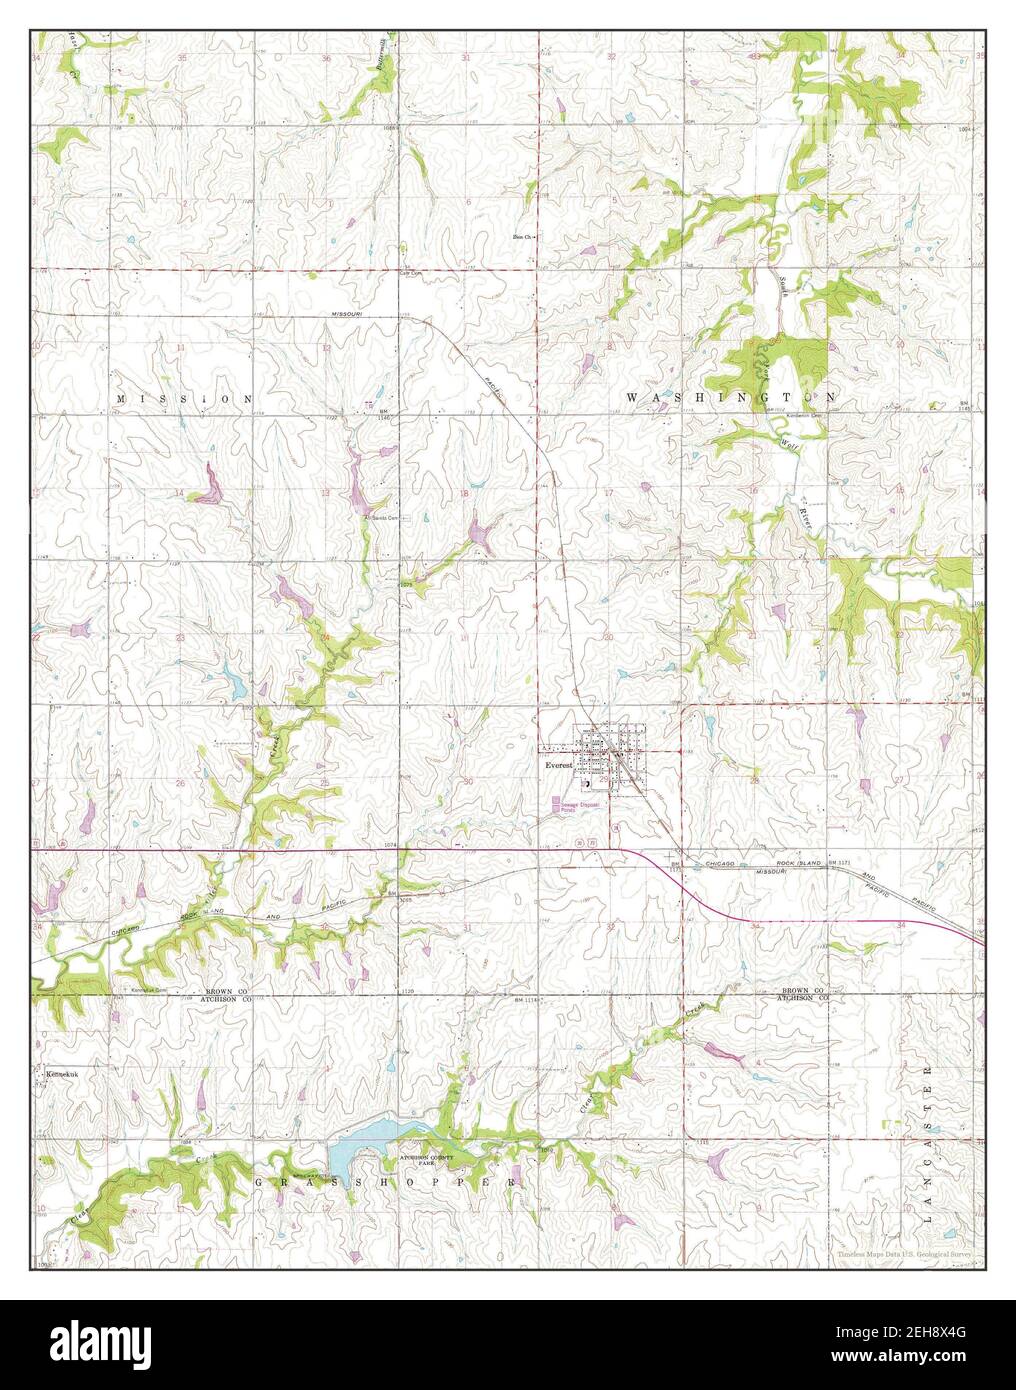 Everest, Kansas, map 1961, 1:24000, United States of America by Timeless Maps, data U.S. Geological Survey Stock Photo